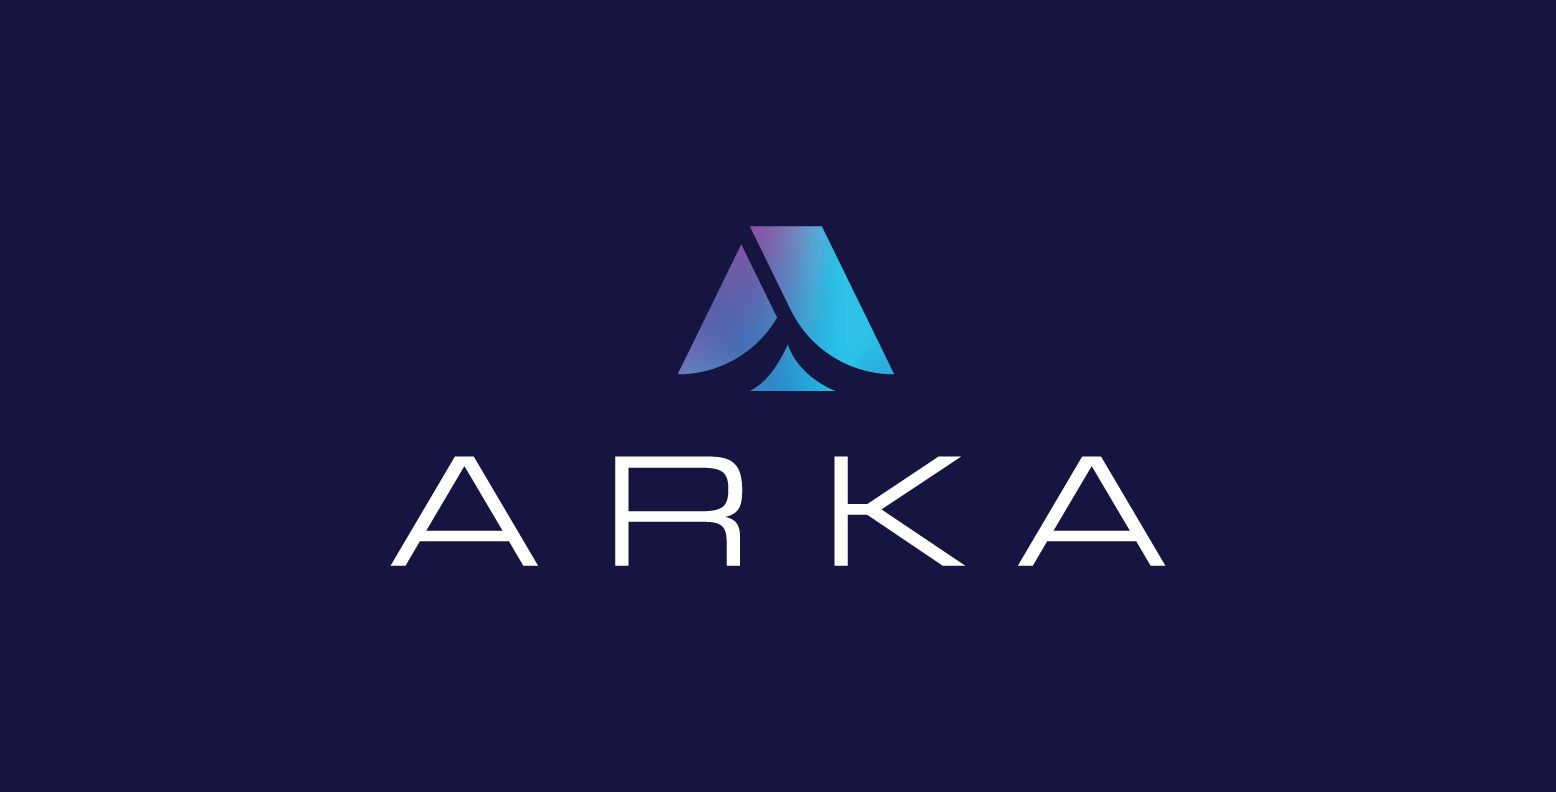 Full color ARKA logo on navy blue background